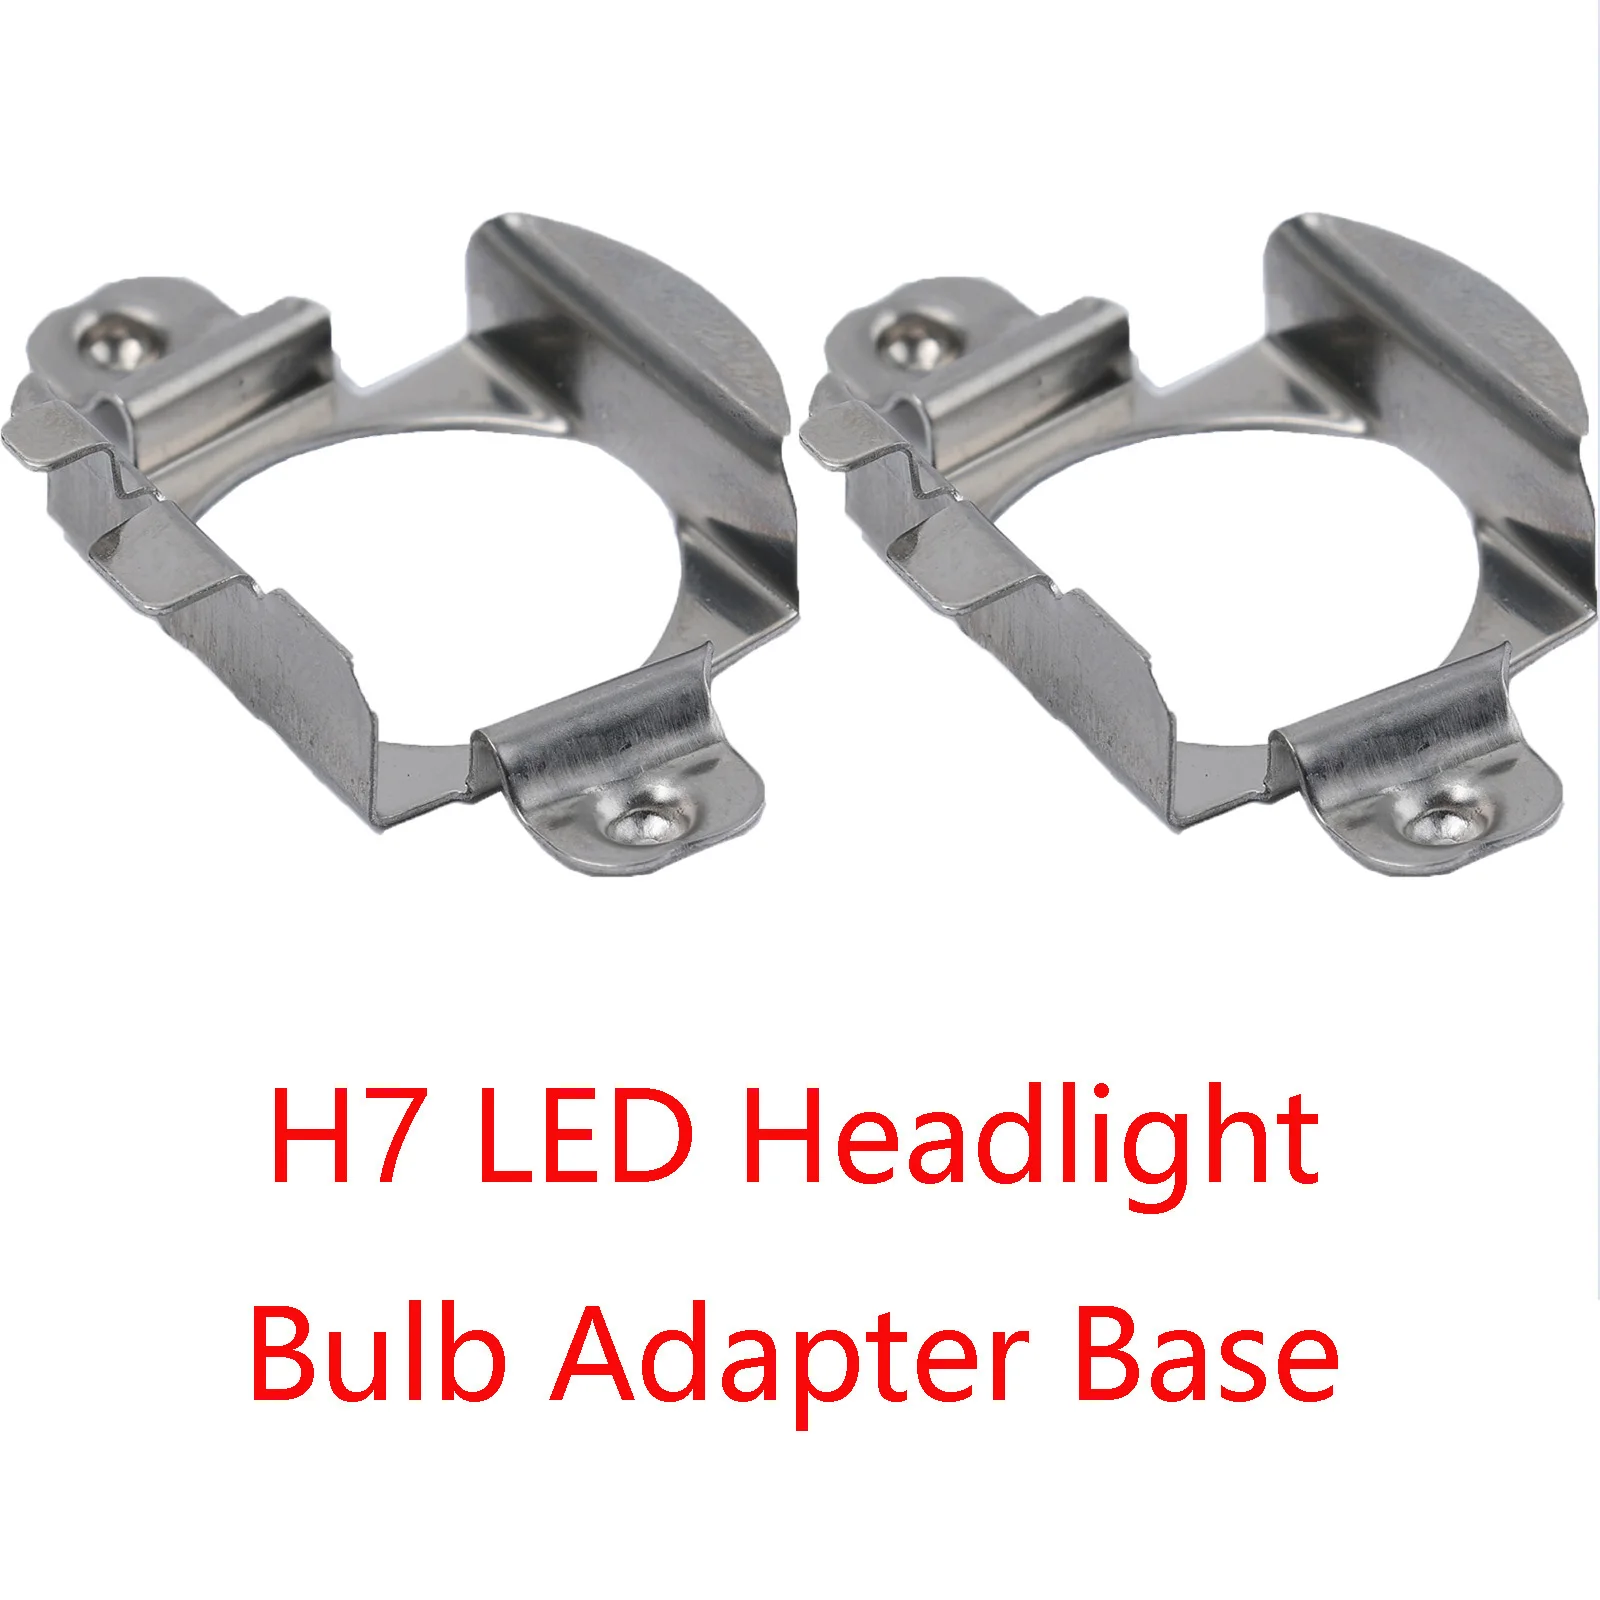 

2Pcs H7 LED Headlight Bulb Base For VW Passat CC Touran Tiguan Touareg Car Adapter Retainer Headlamp Socket Holder Metal Silver